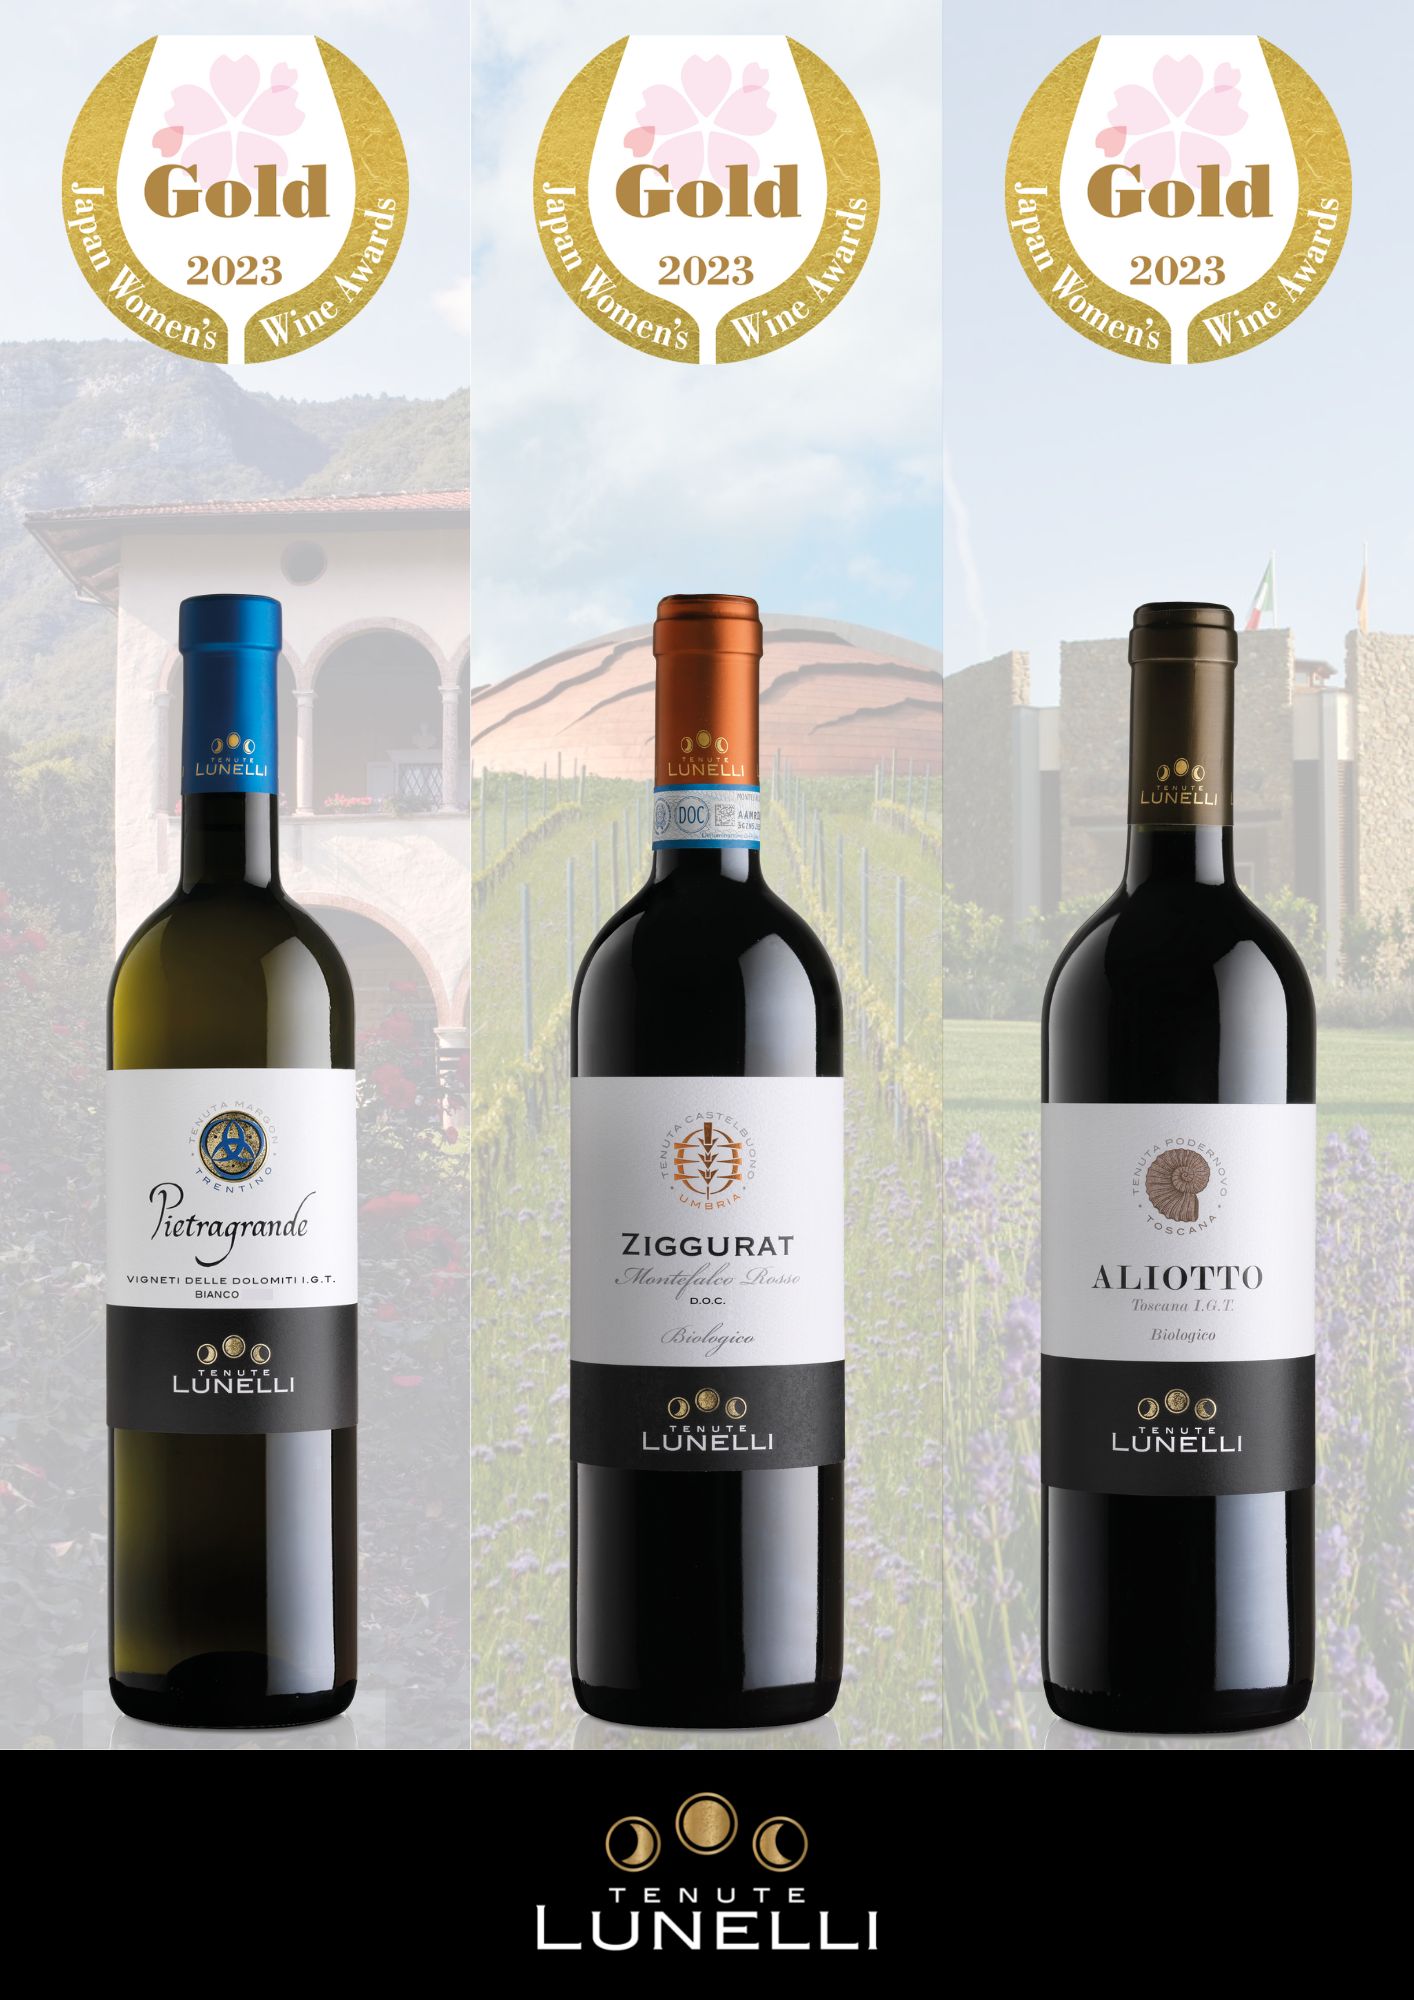 Tenute Lunelli wines honoured at Sakura Award, the prestigious Japanese wine competition